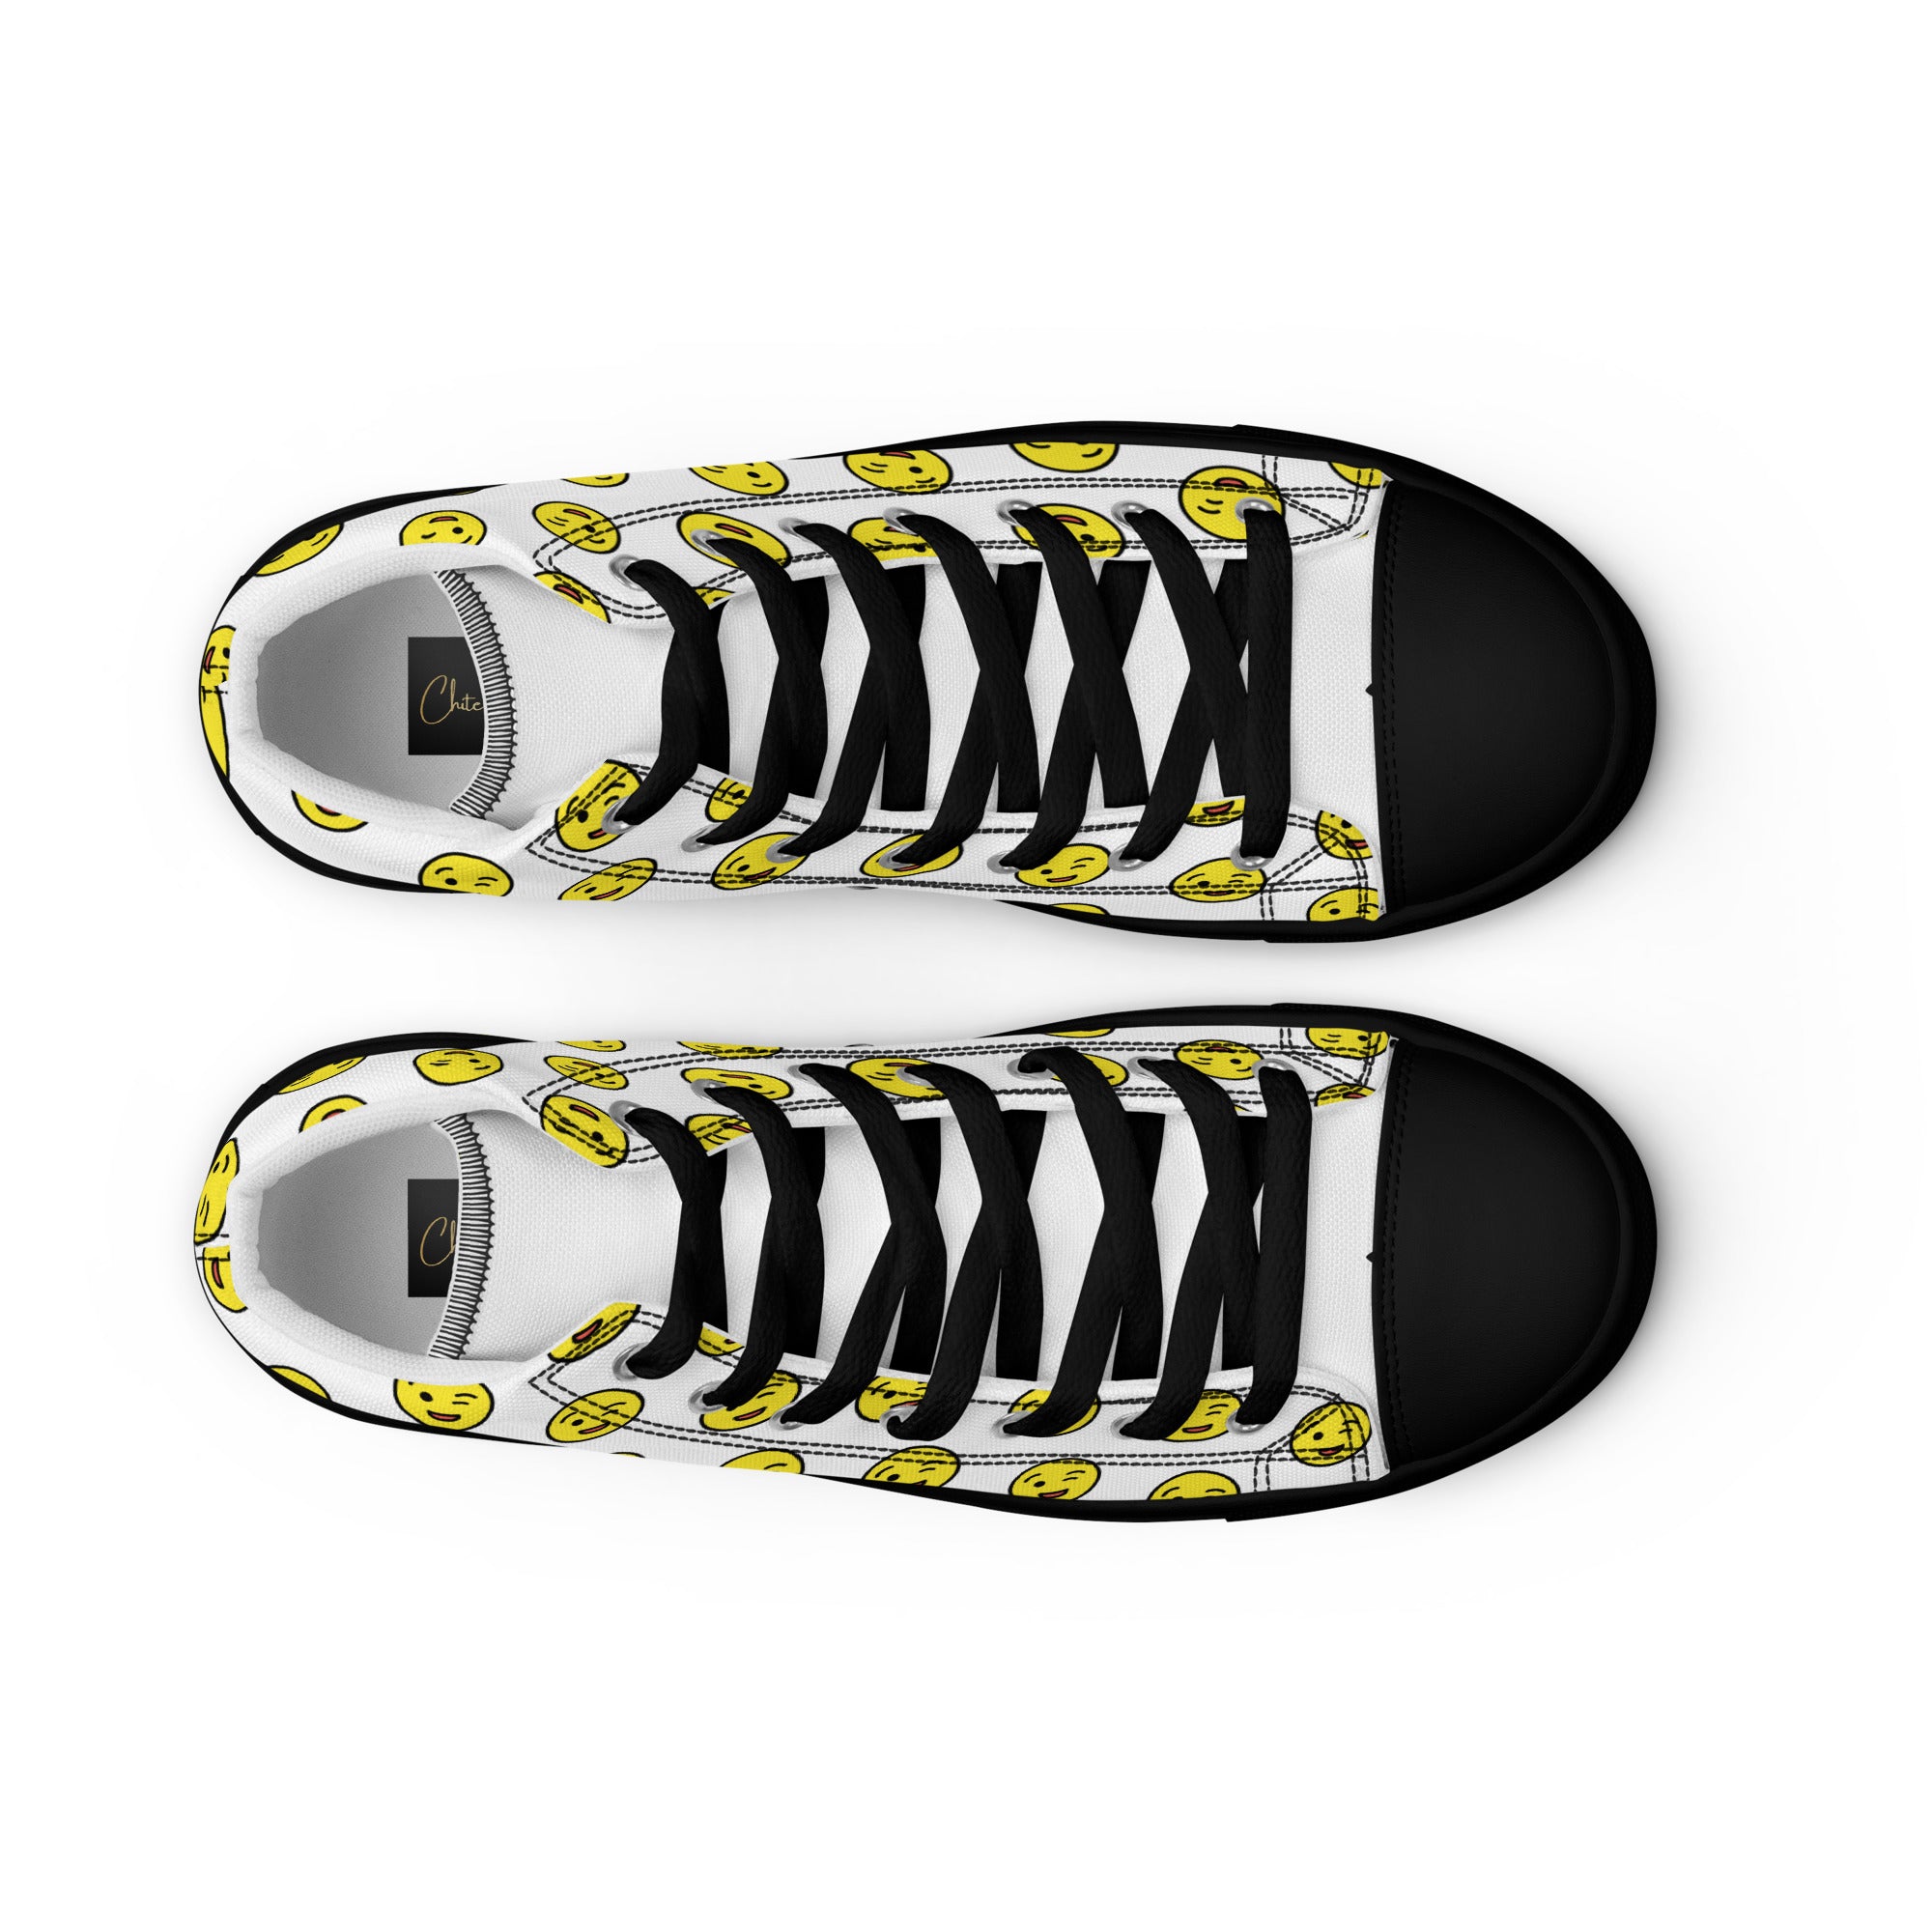 Chitelli's Winking Face Emoji Men's High Top Sneakers